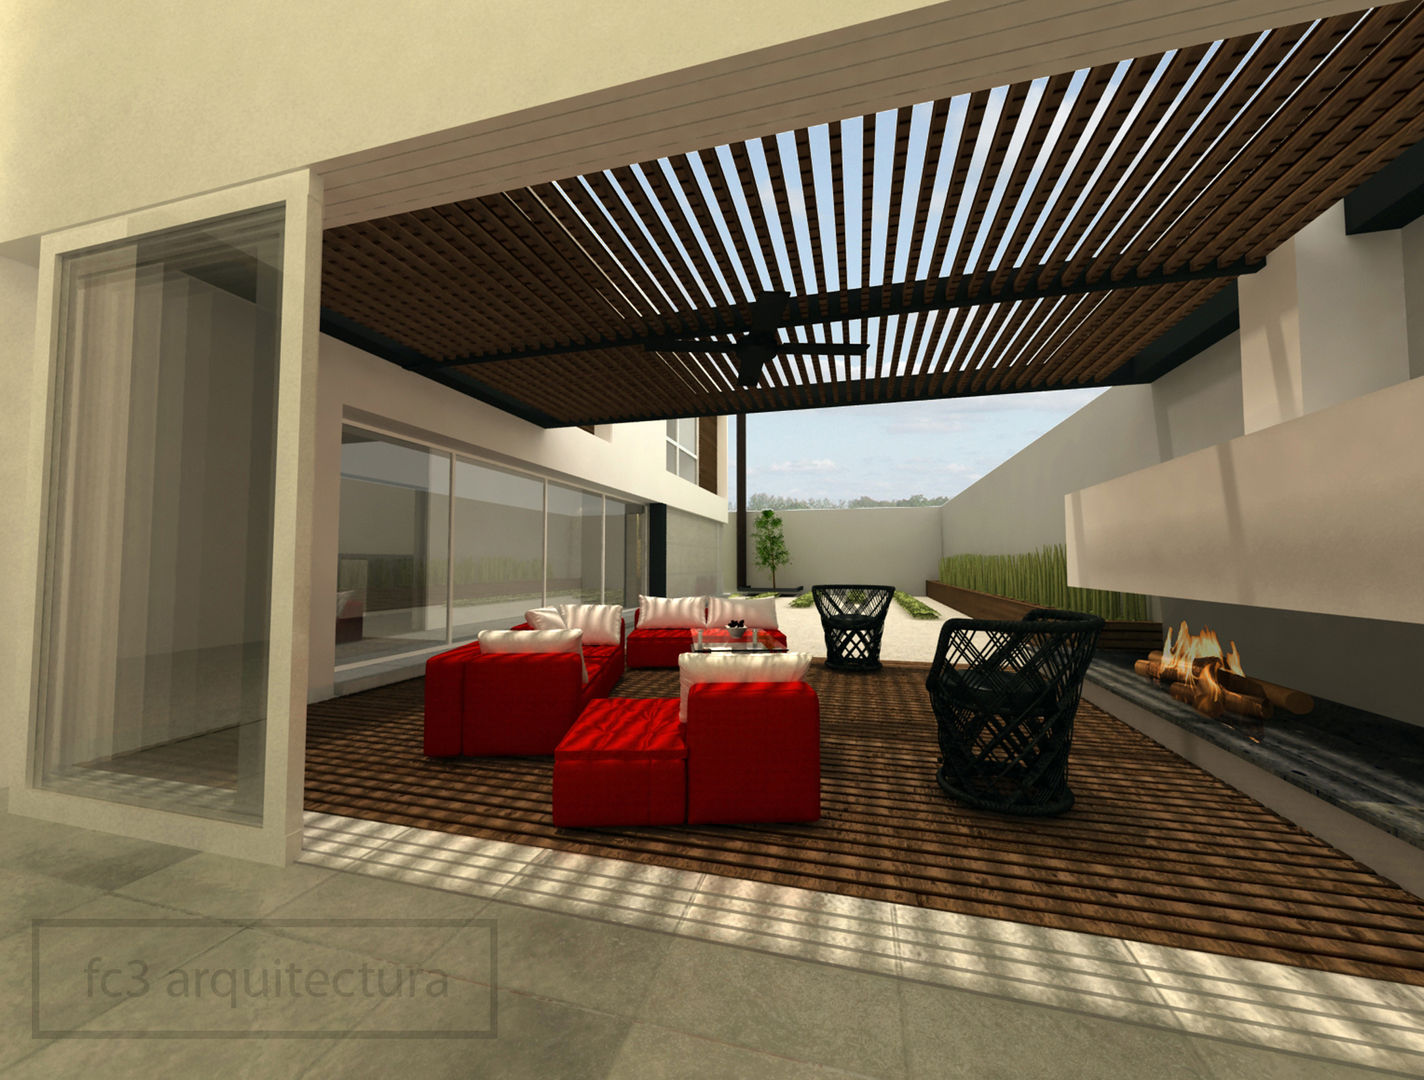 Casa en La herradura, fc3arquitectura fc3arquitectura Modern balcony, veranda & terrace